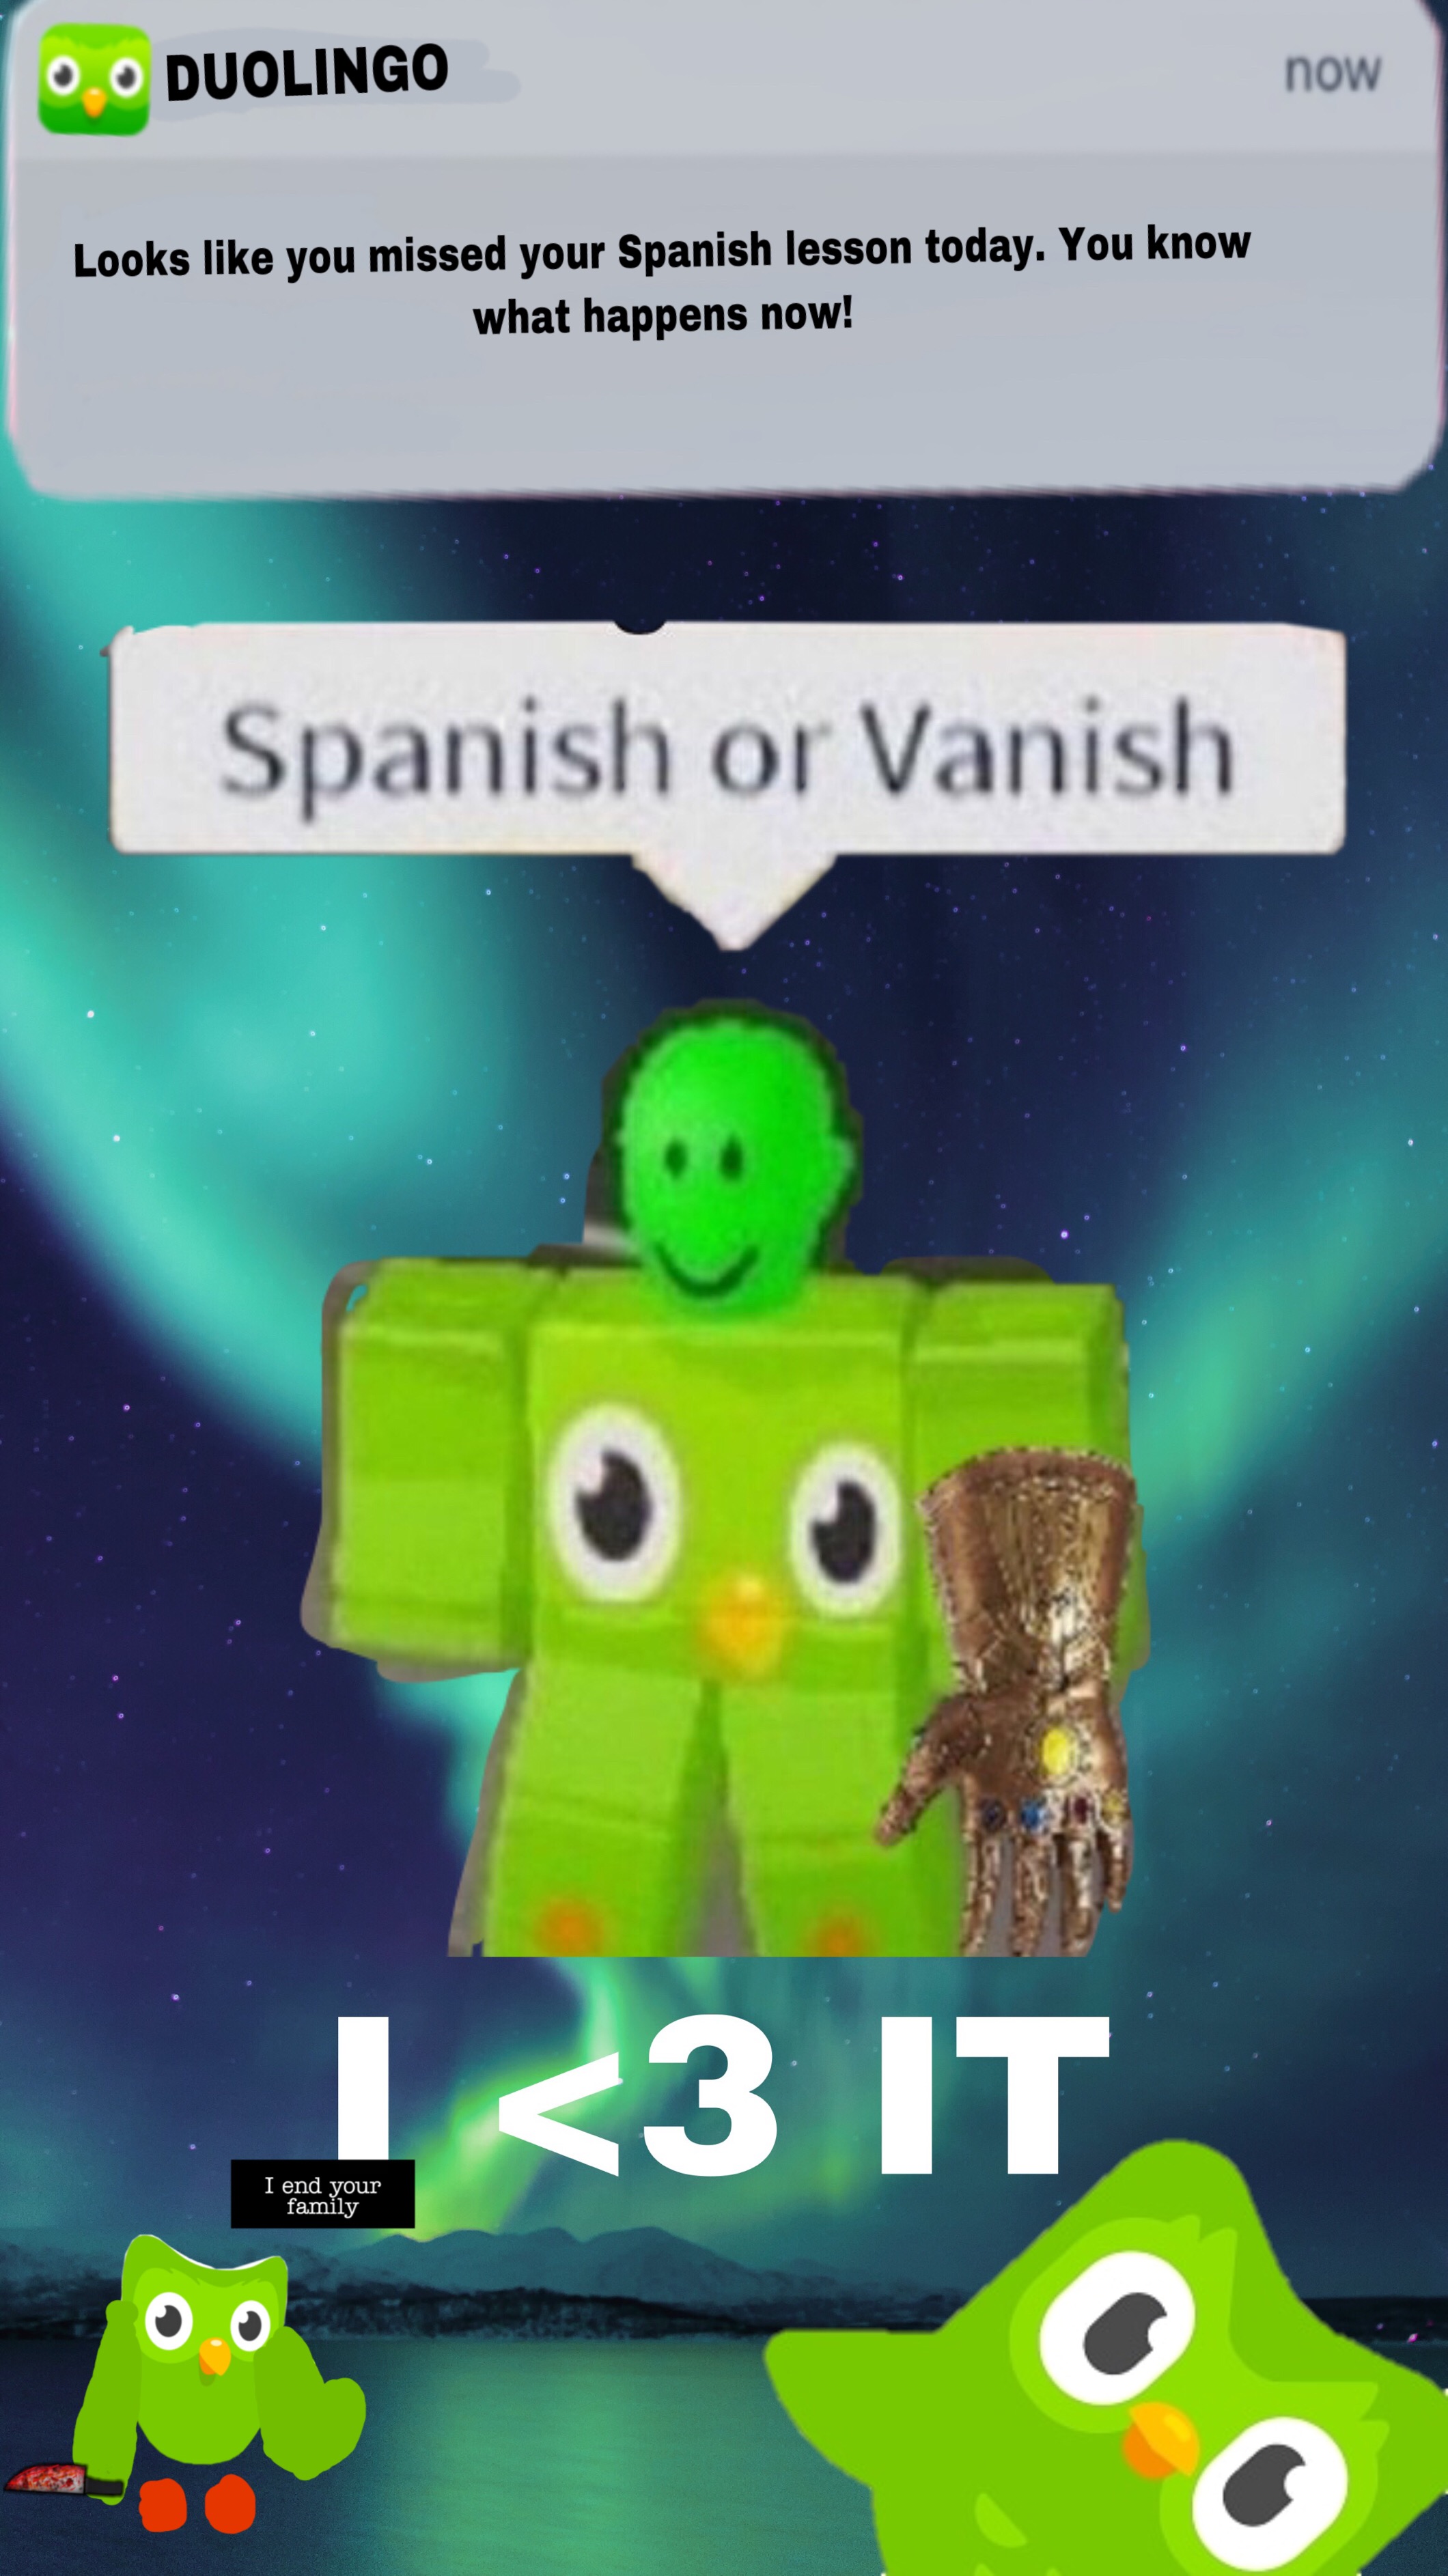 Duolingo Meme Roblox Image By Uxu - roblox memes spanish or vanish